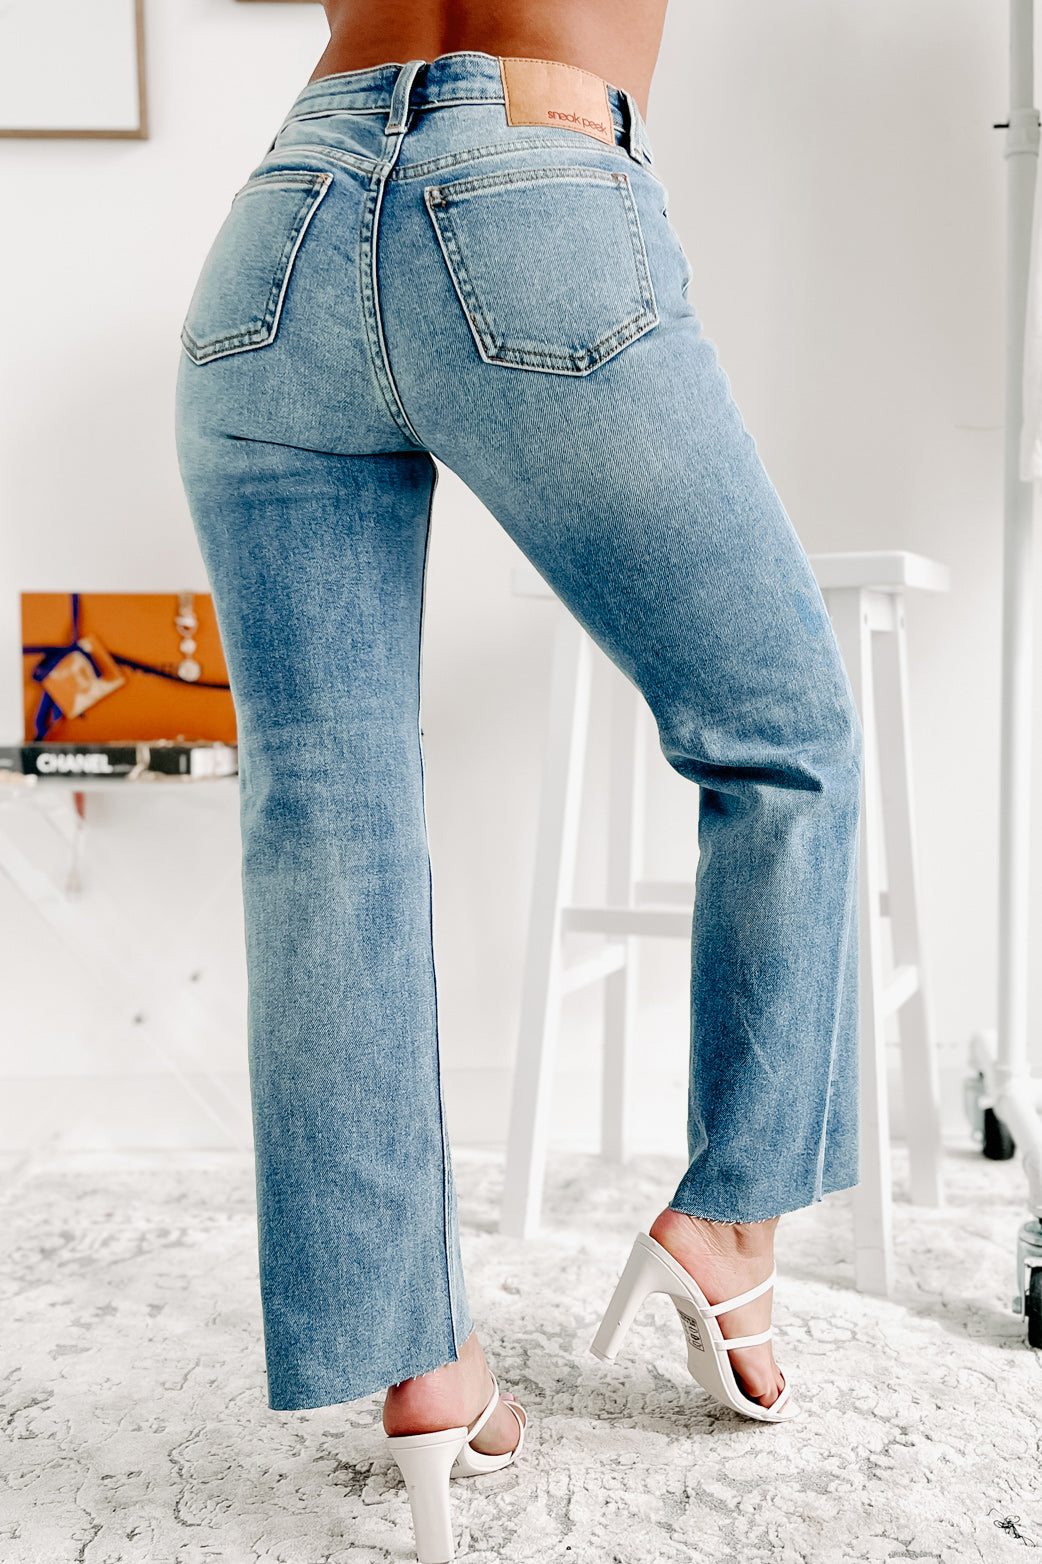 Women's DOORBUSTER Keep My Composure Distressed Sneak Peek Straight Leg Jeans in Medium Light - Size 27